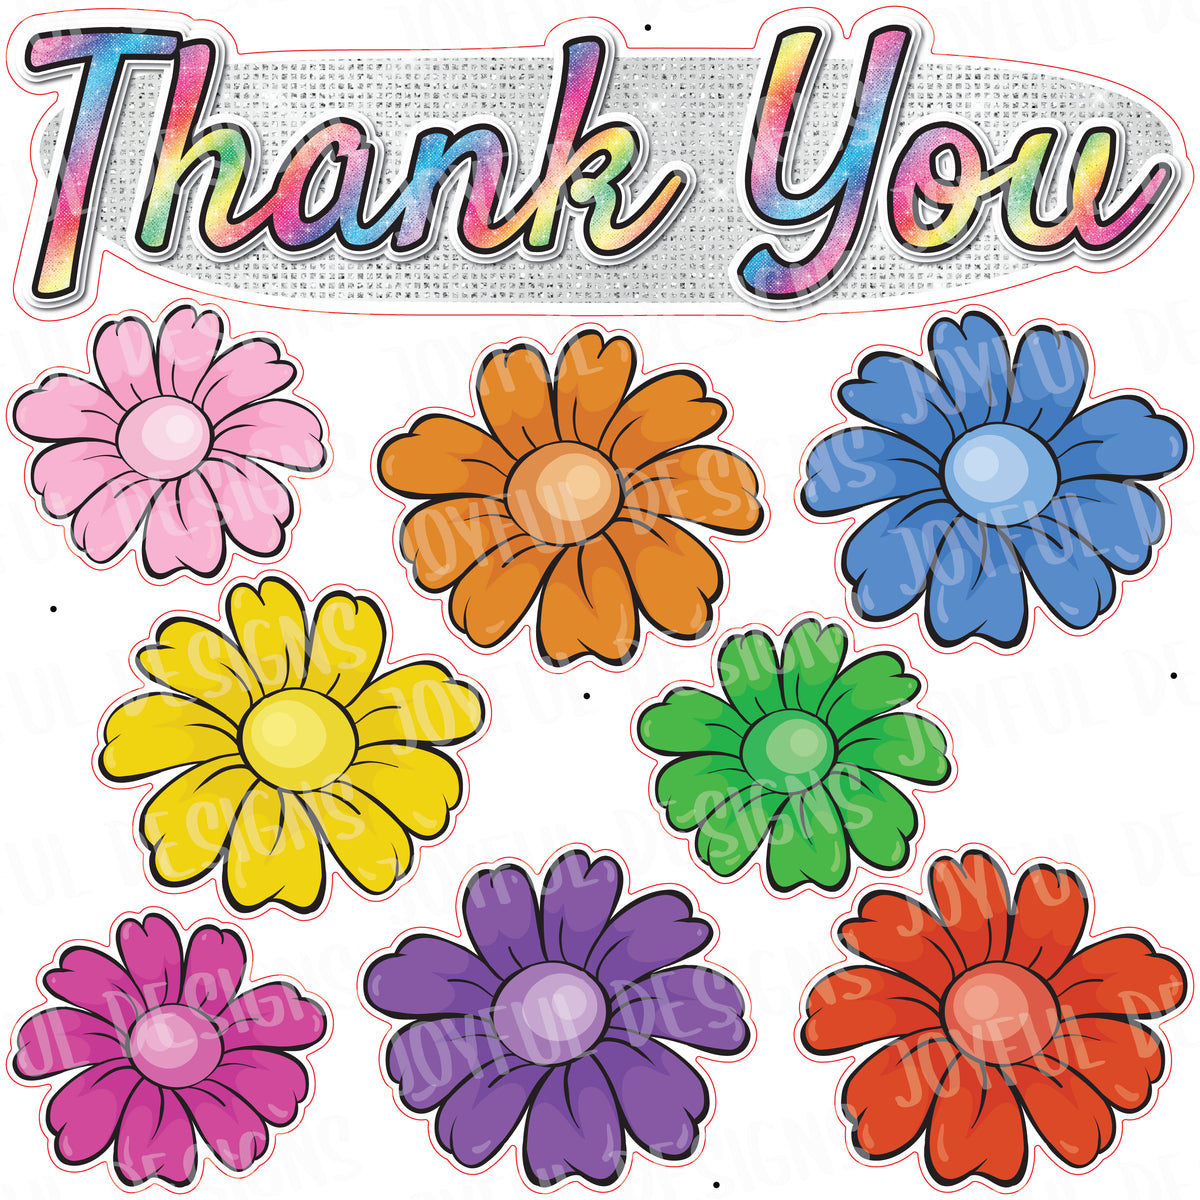 Rainbow Glitter "Thank You" Centerpiece and Rainbow Flowers